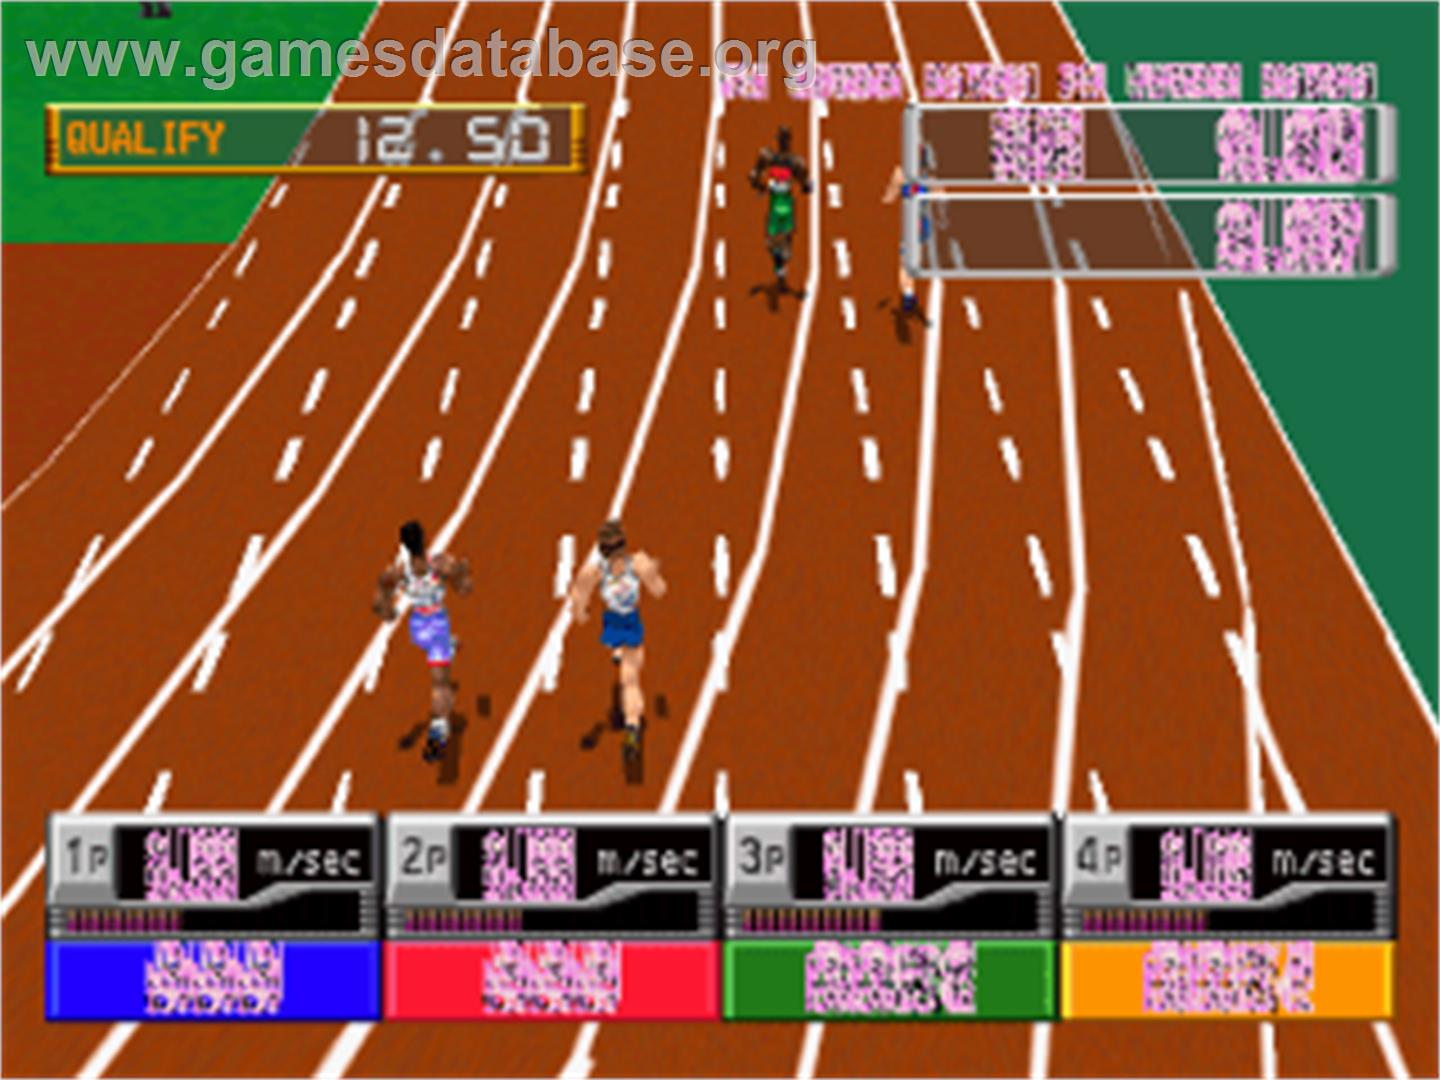 International Track & Field - Sony Playstation - Artwork - In Game